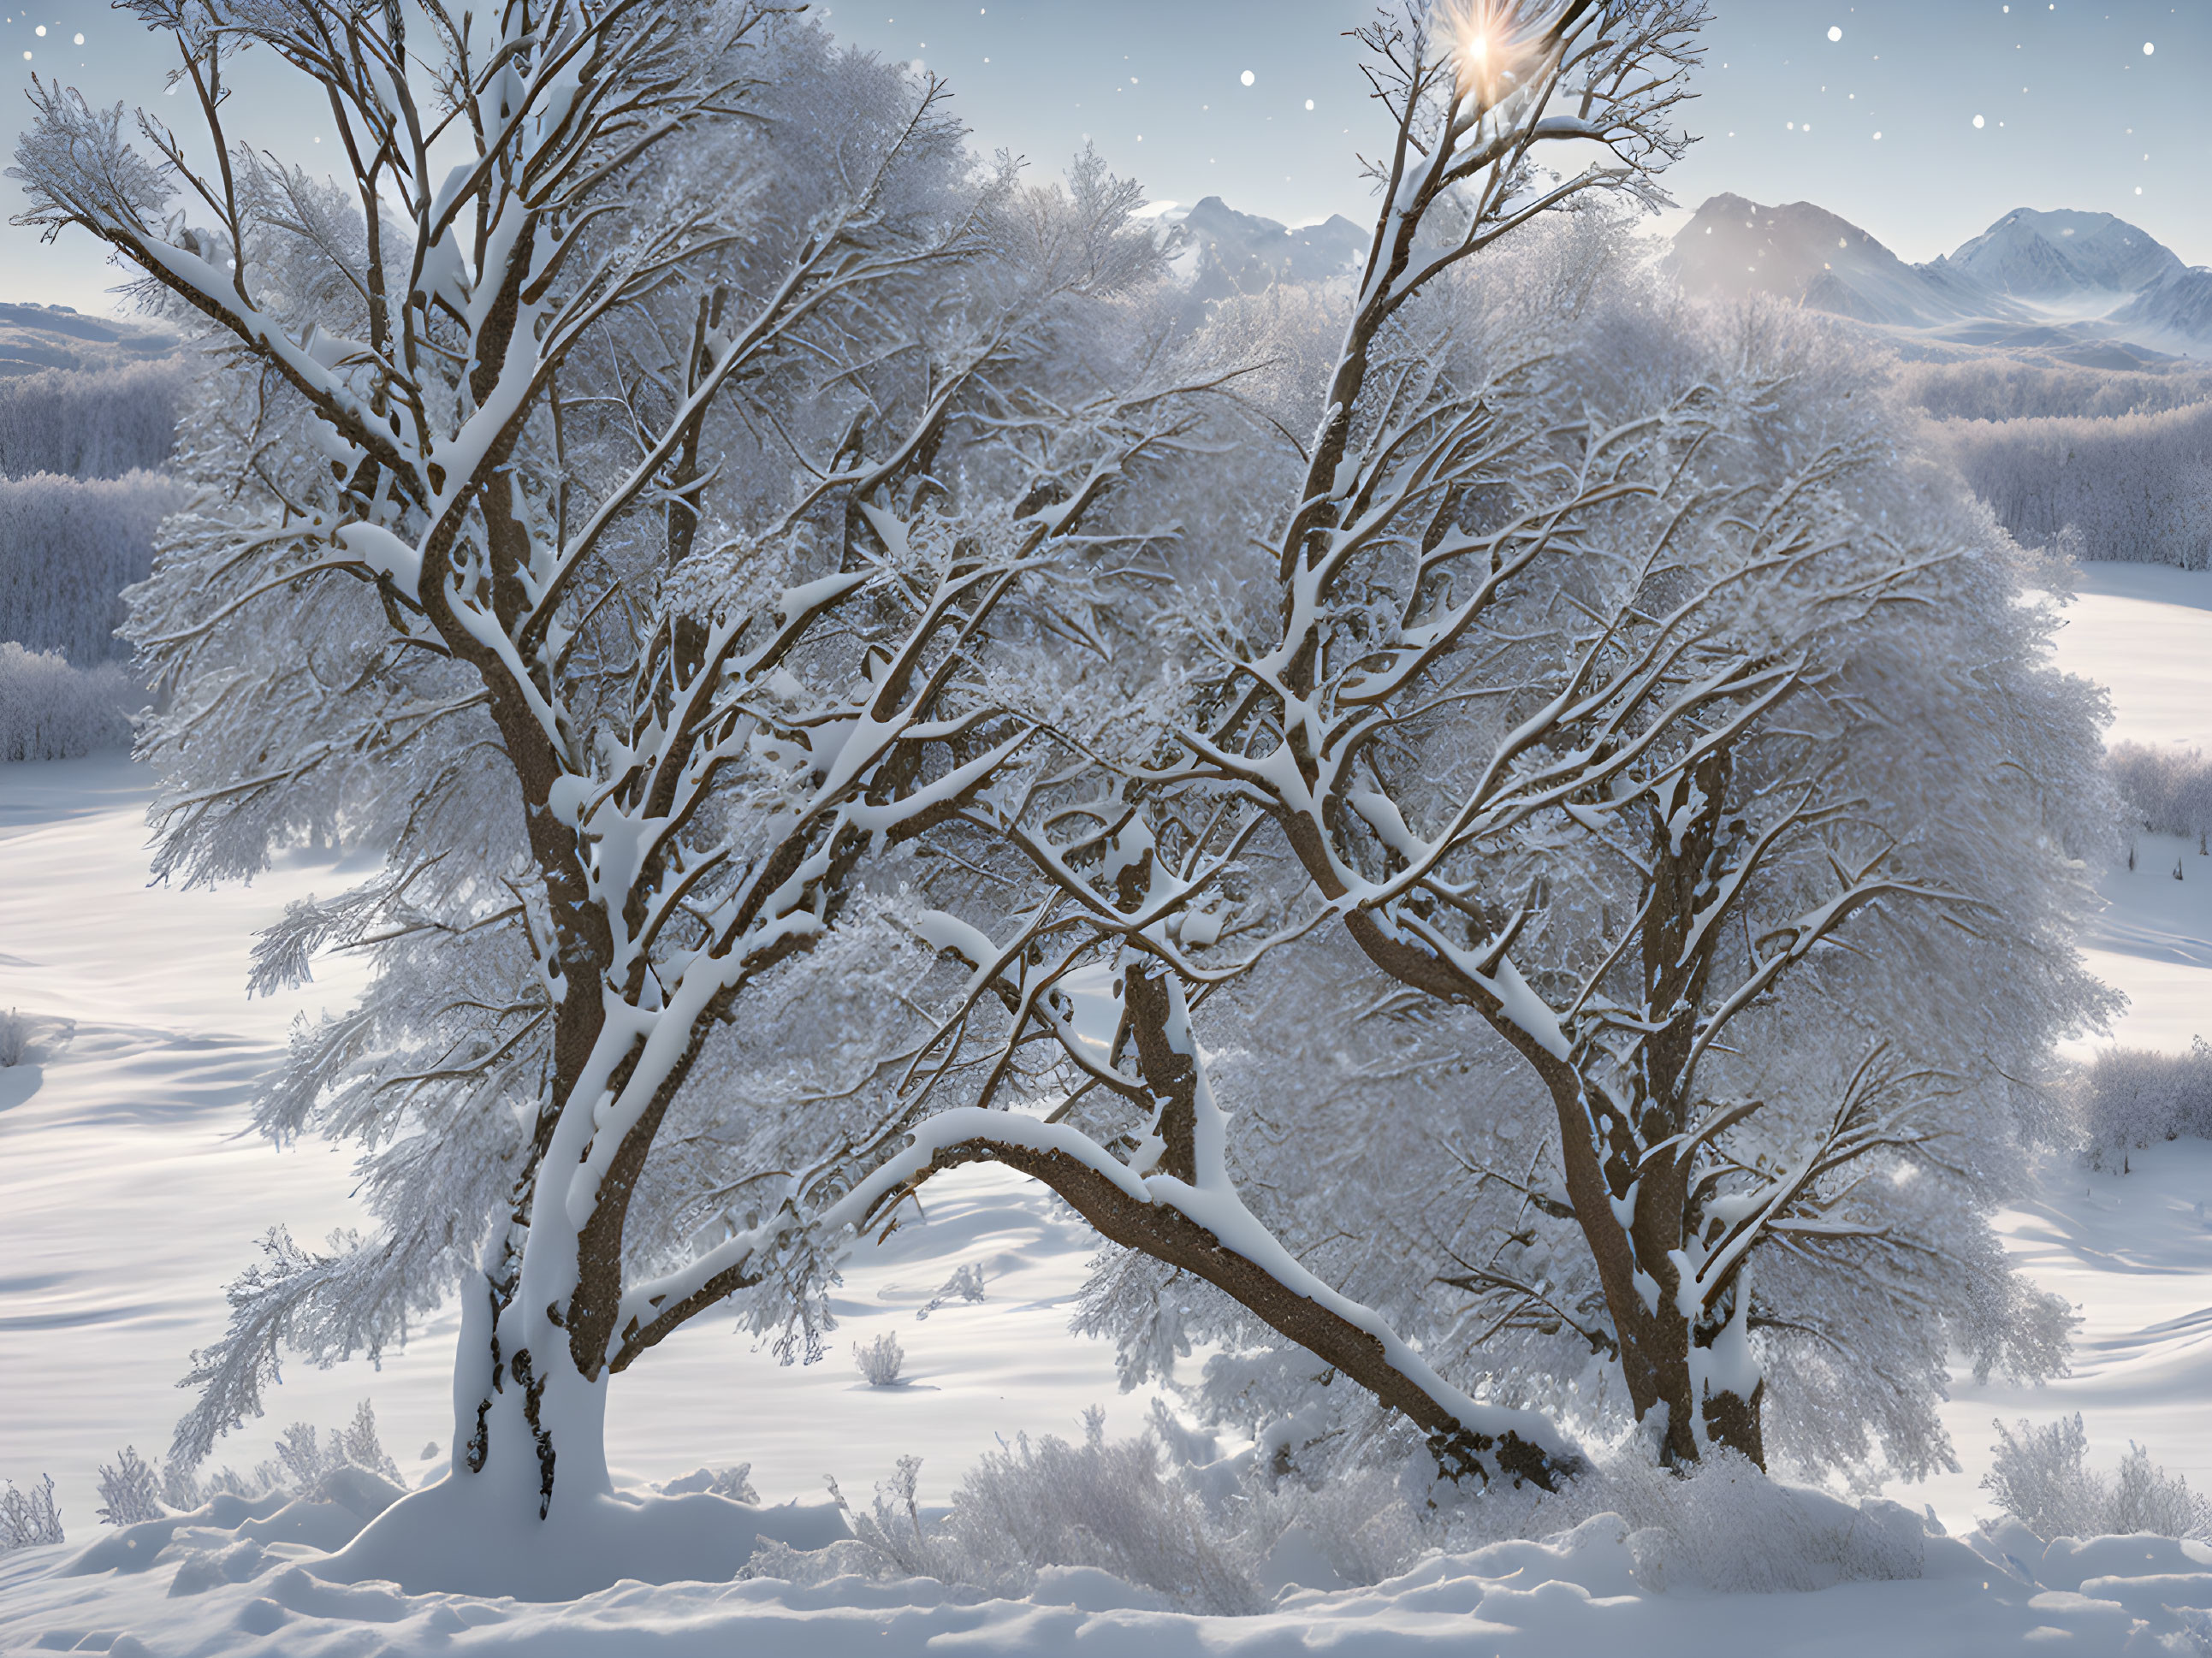 Winter Wonderland: Snowy Tree Landscape